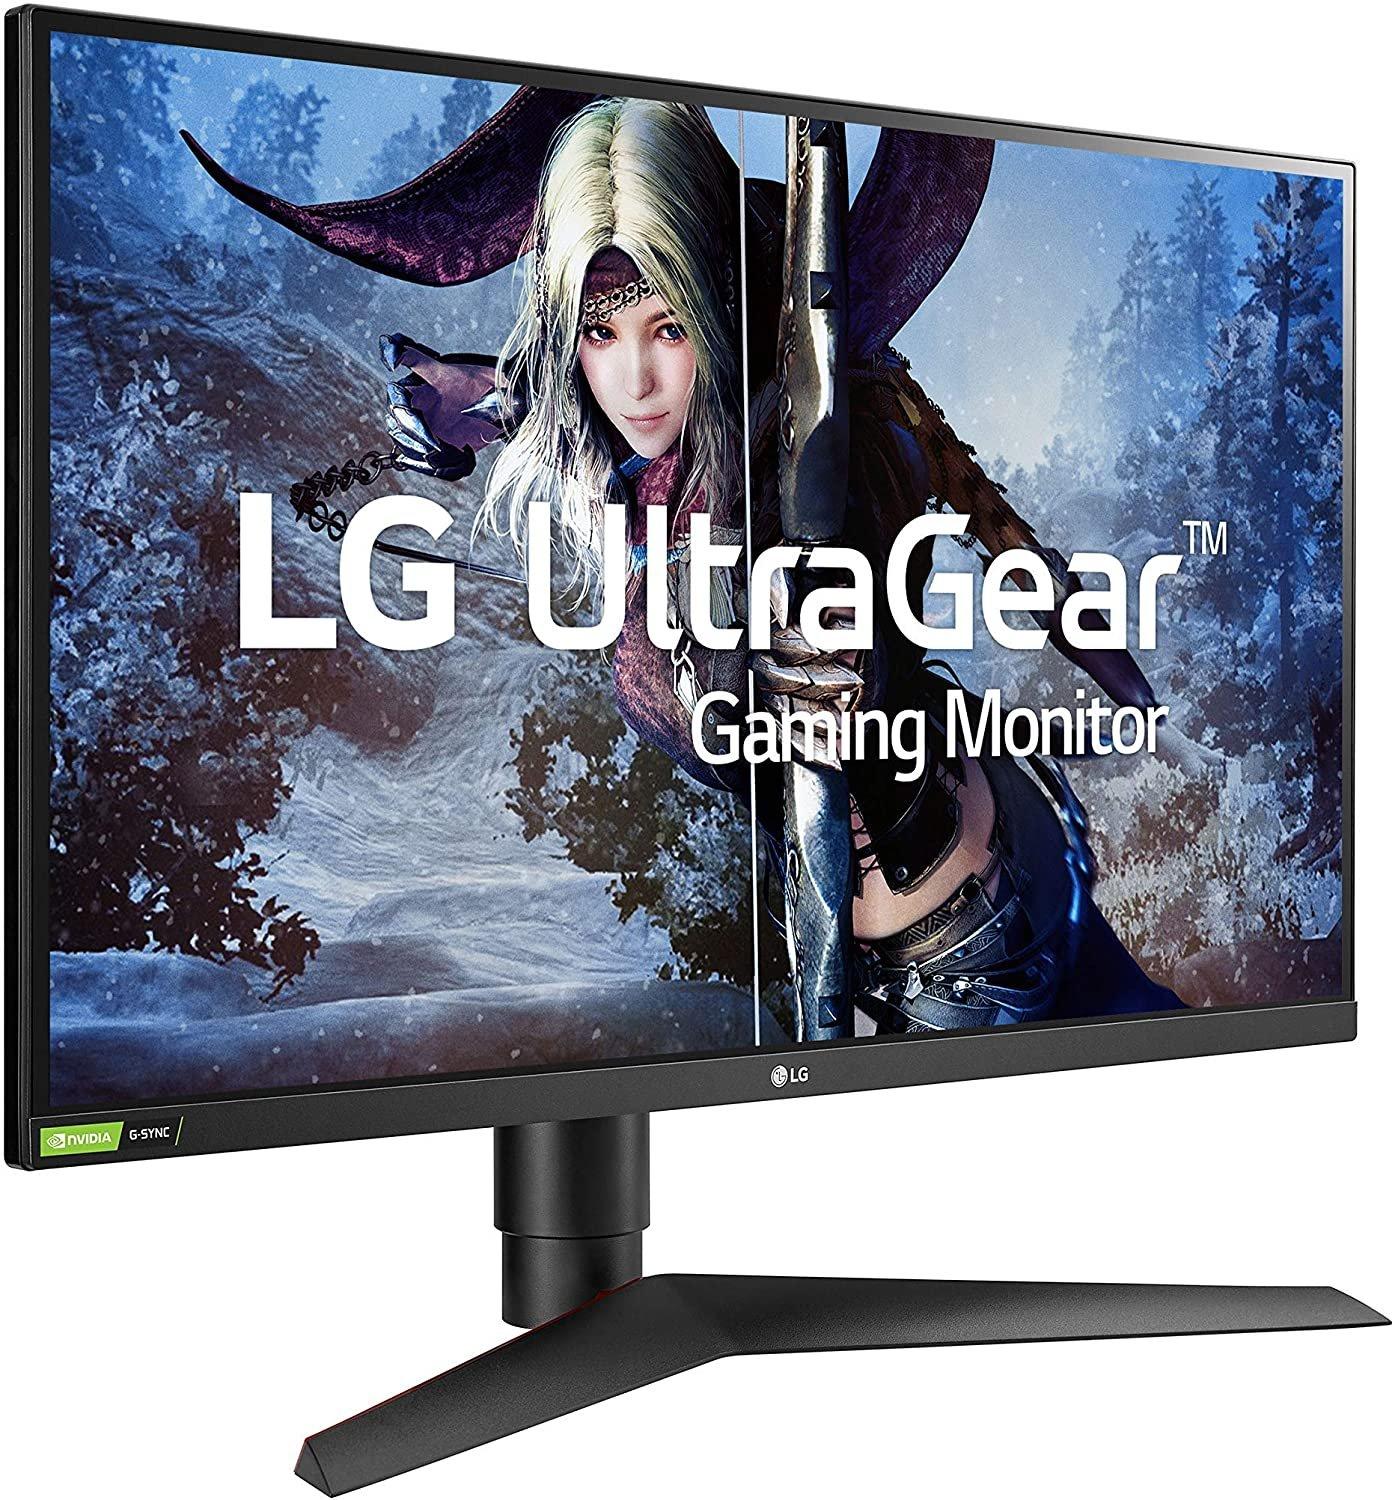 LG Ultragear 24 inch gaming monitor, Computers & Tech, Parts